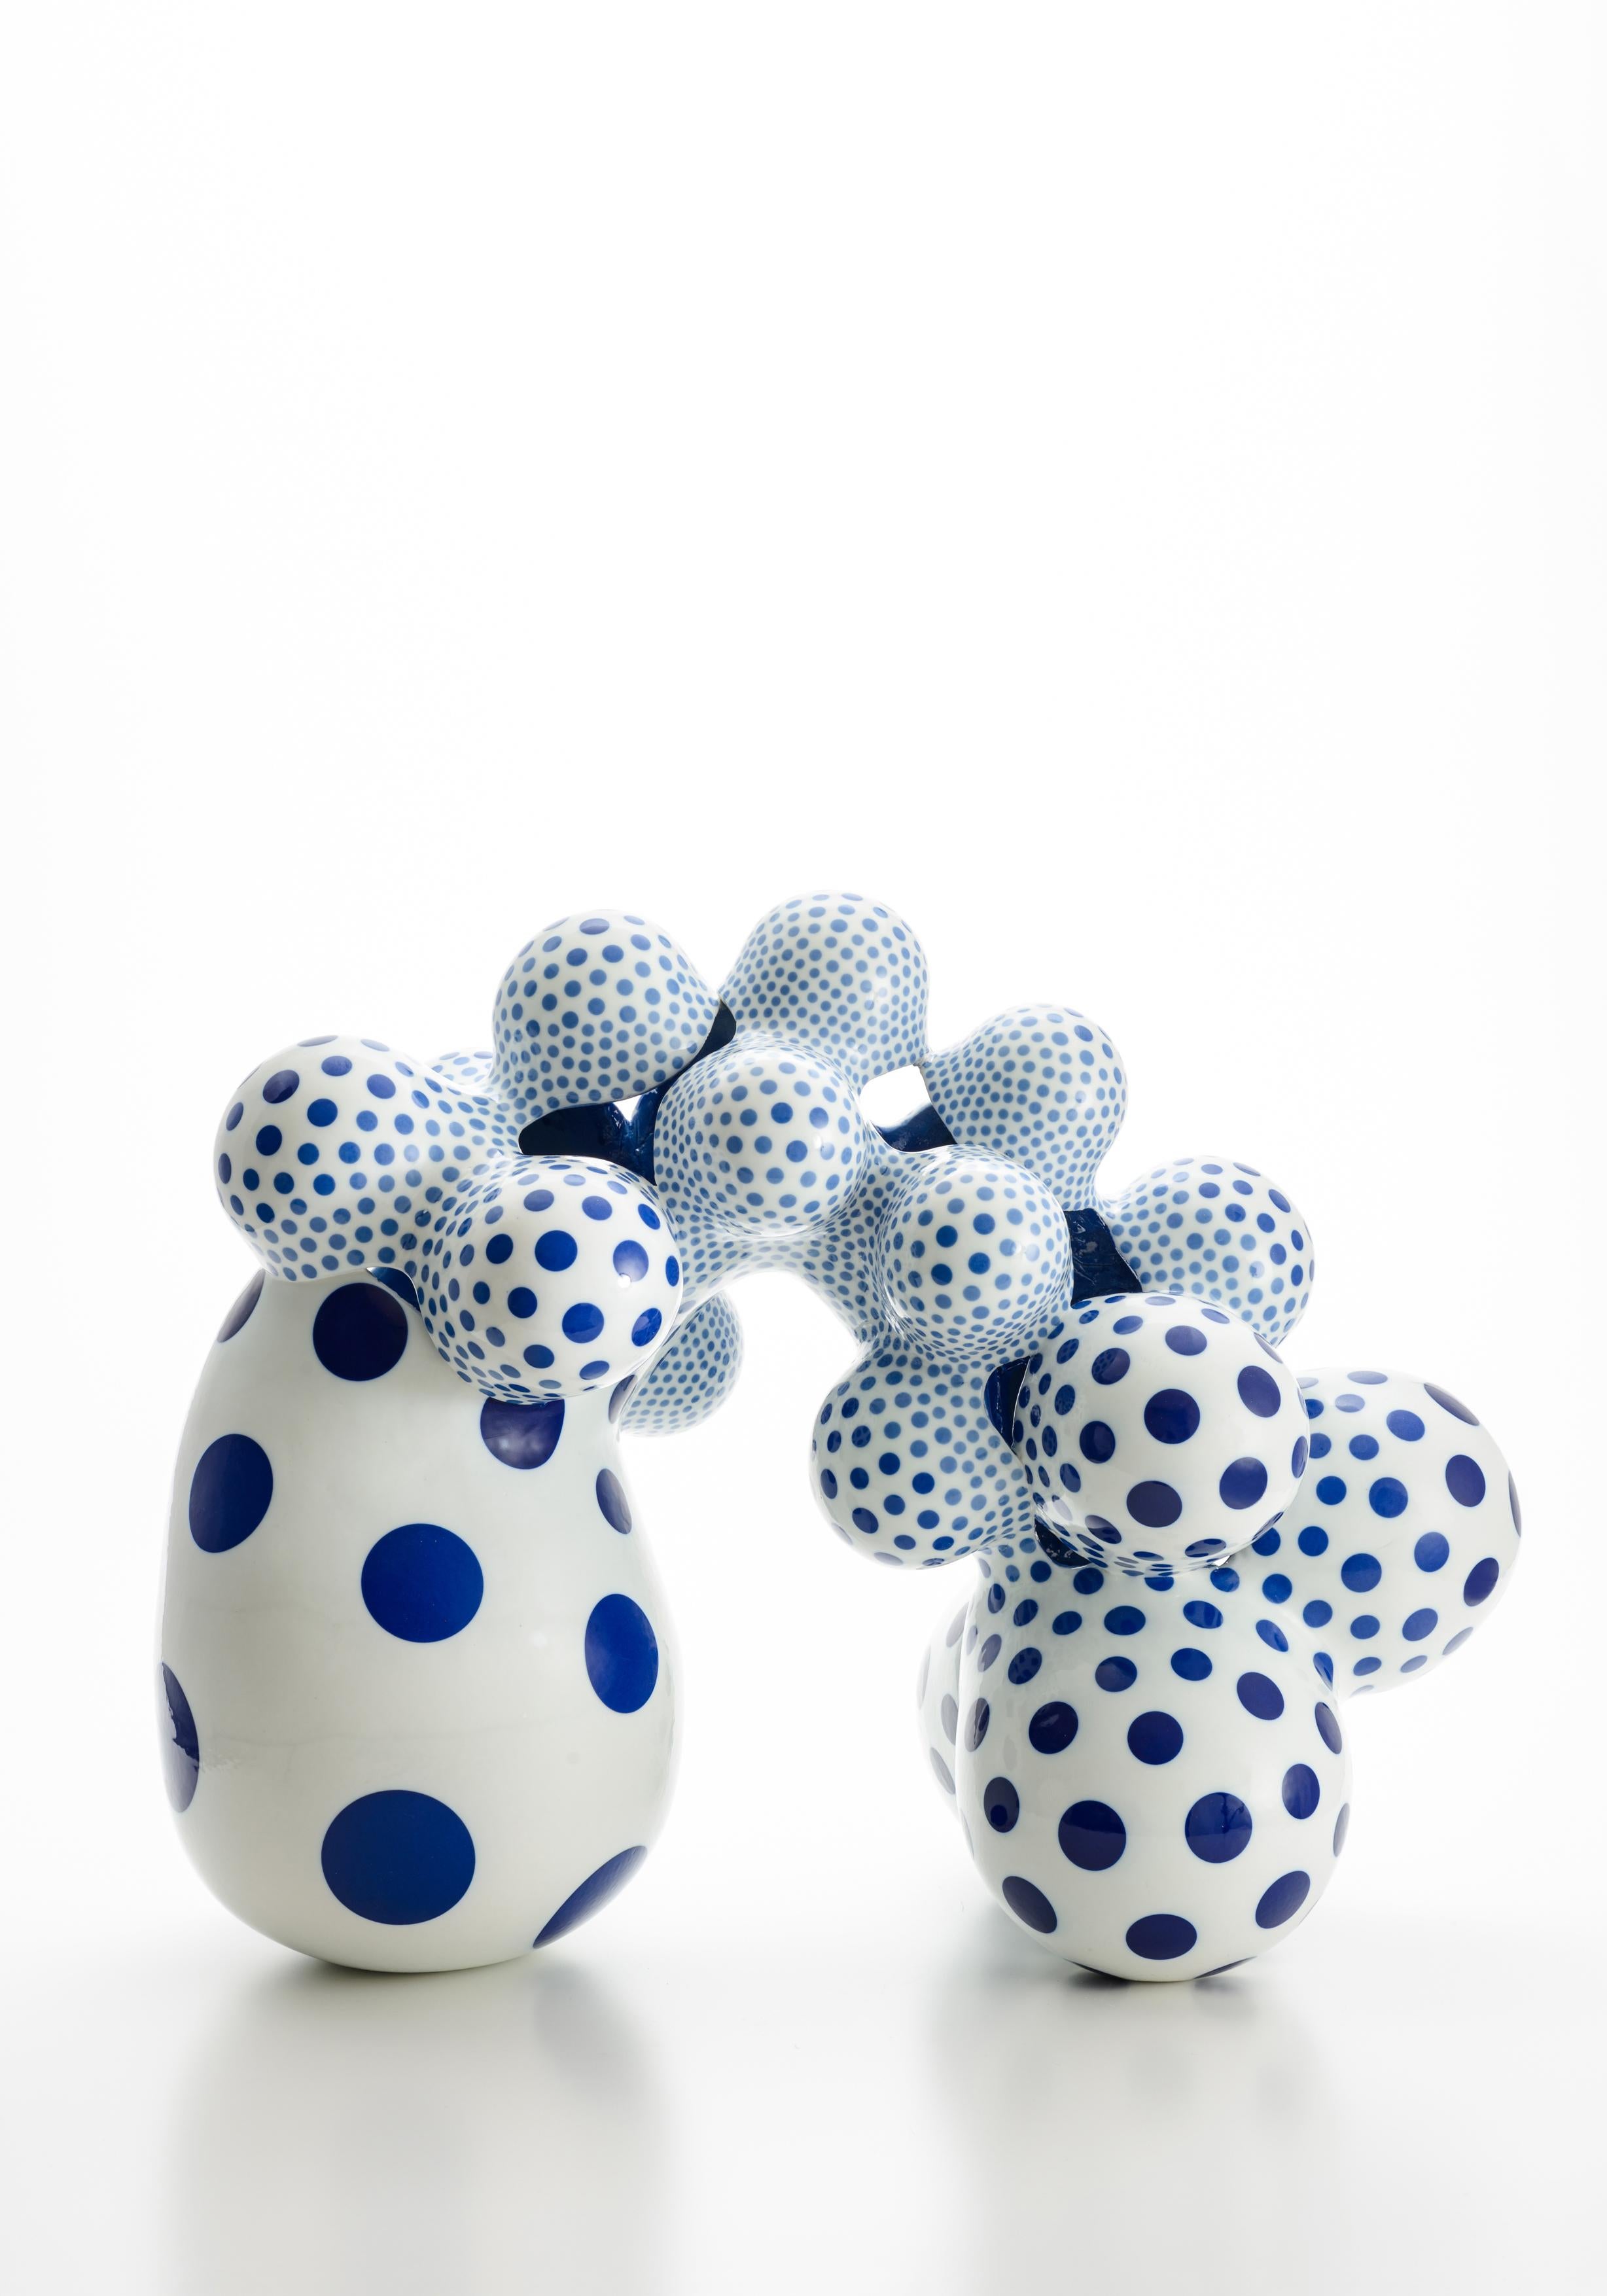 "Proliferating Forms 2037", Contemporary, Ceramic, Sculpture, Porcelain, Japan